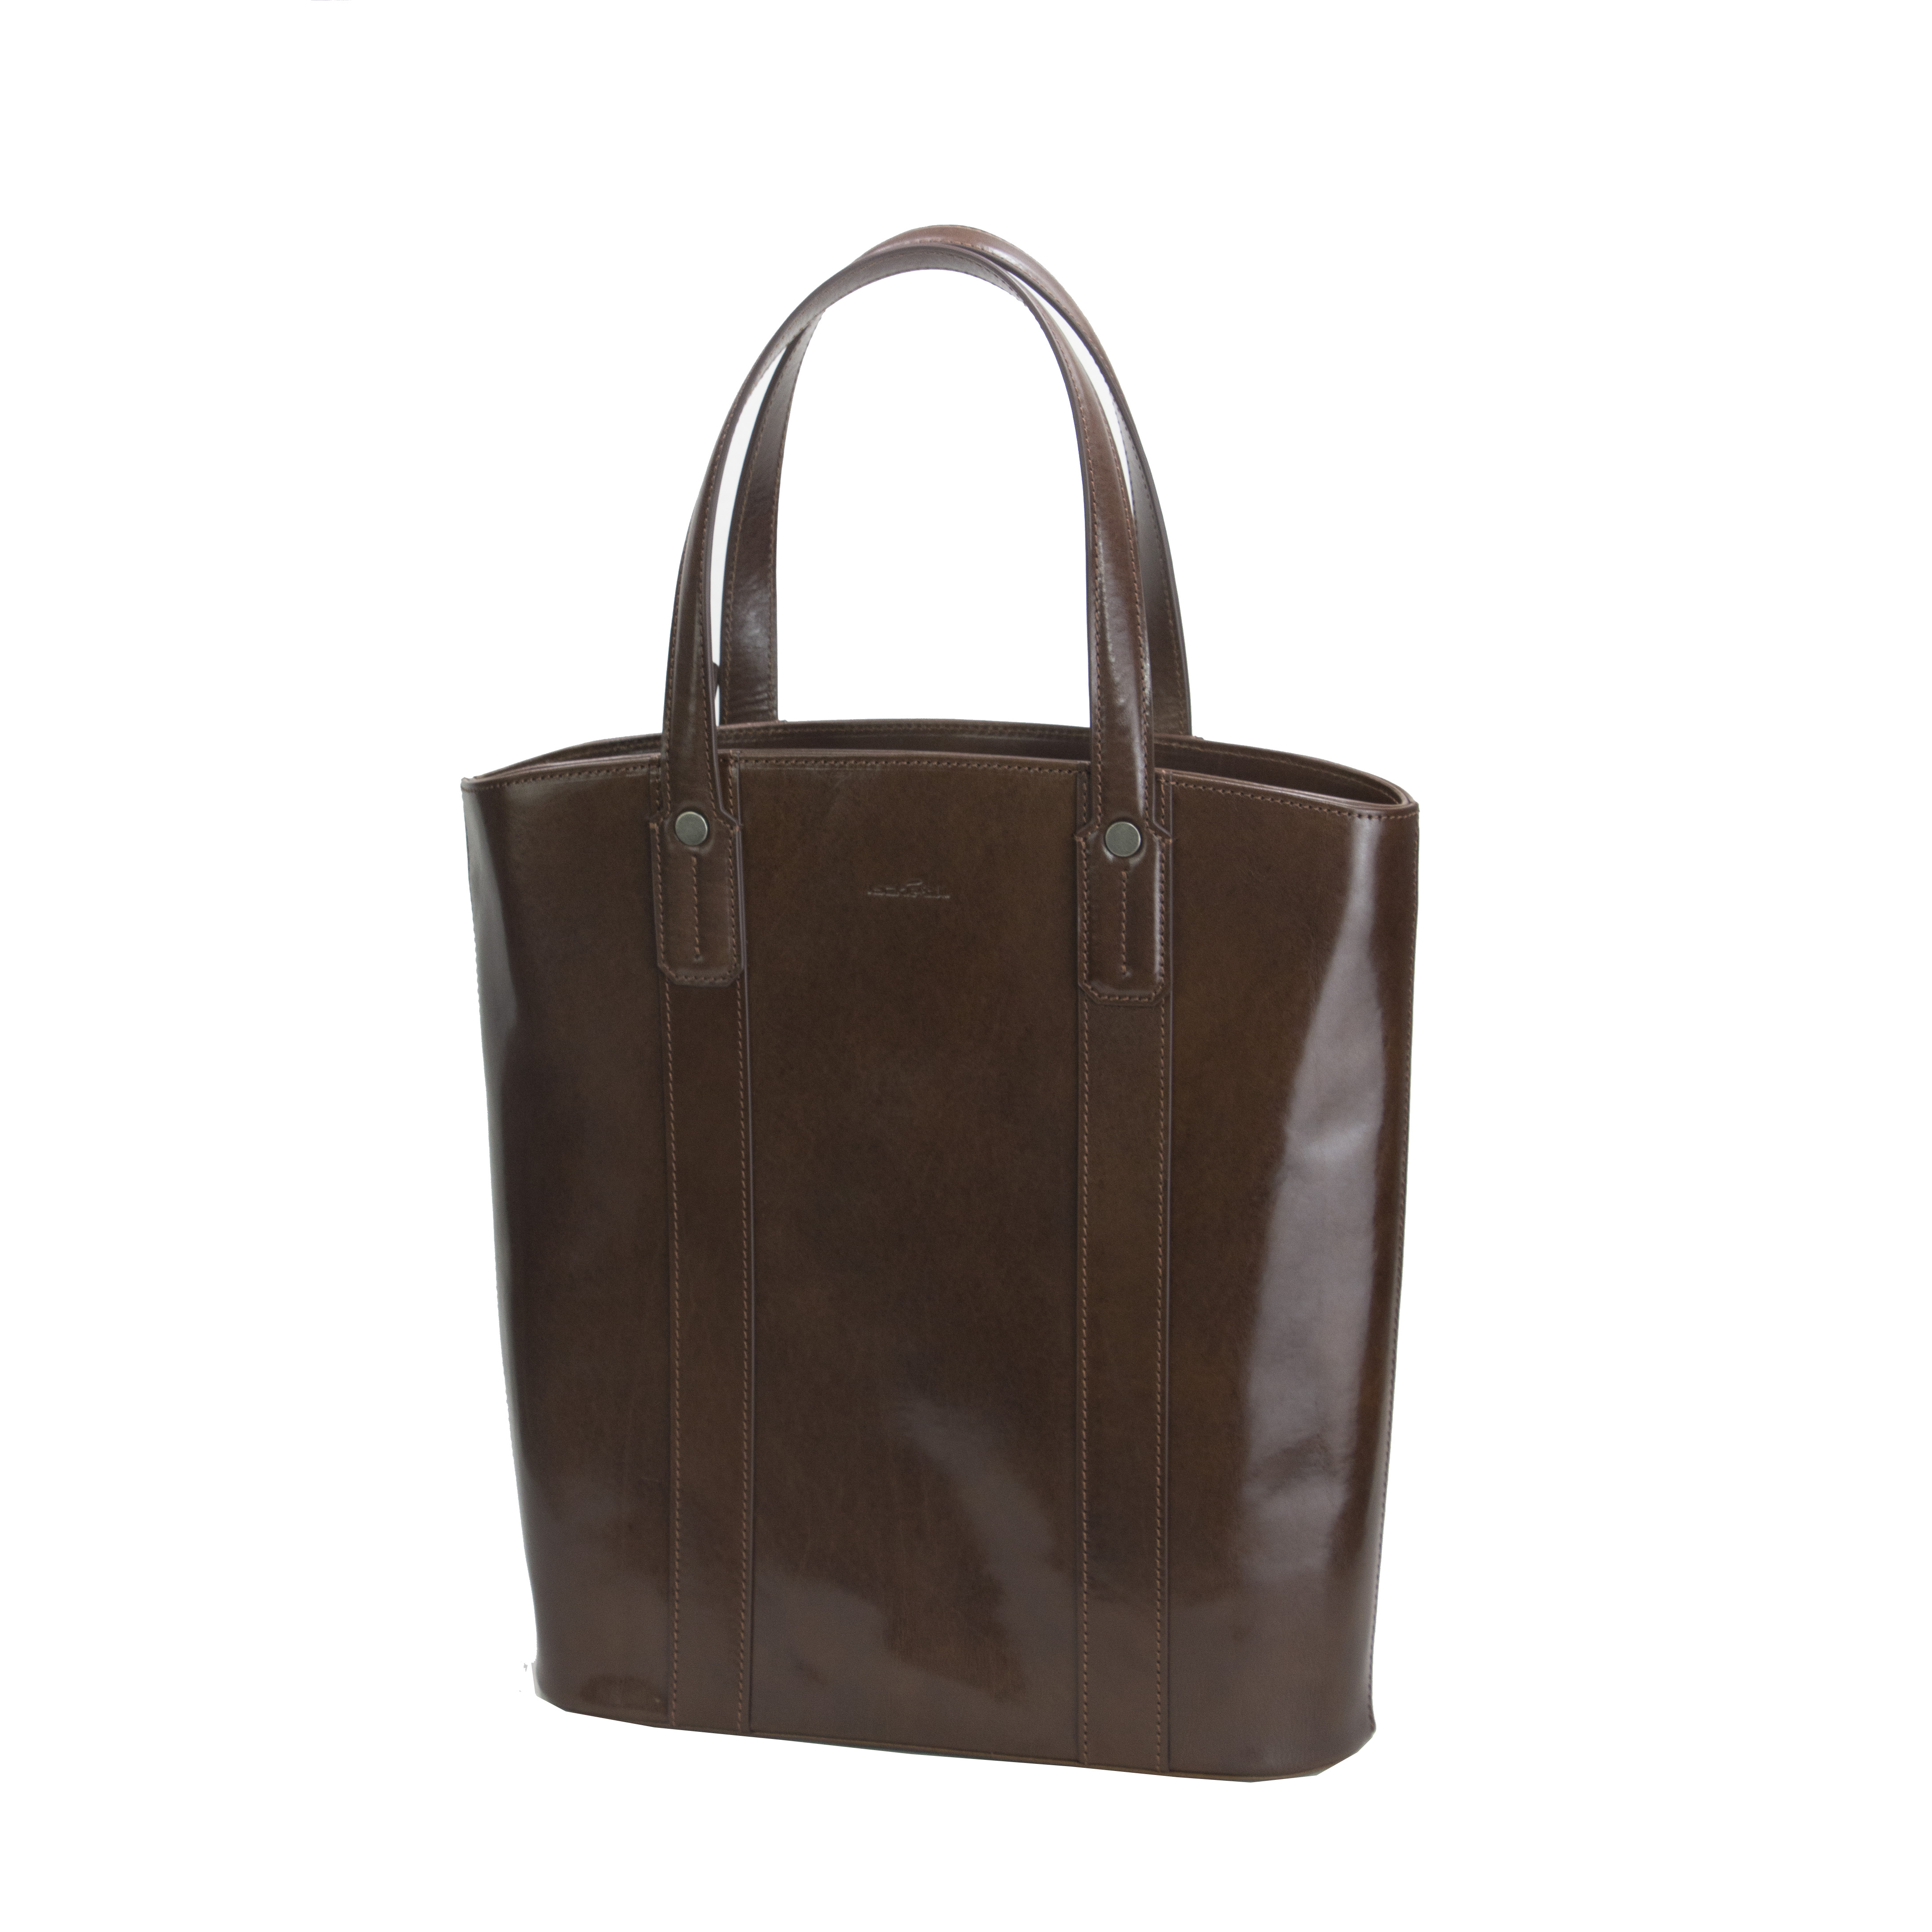 2019 fashionbag customized large genuine leather bagtote handbag for women